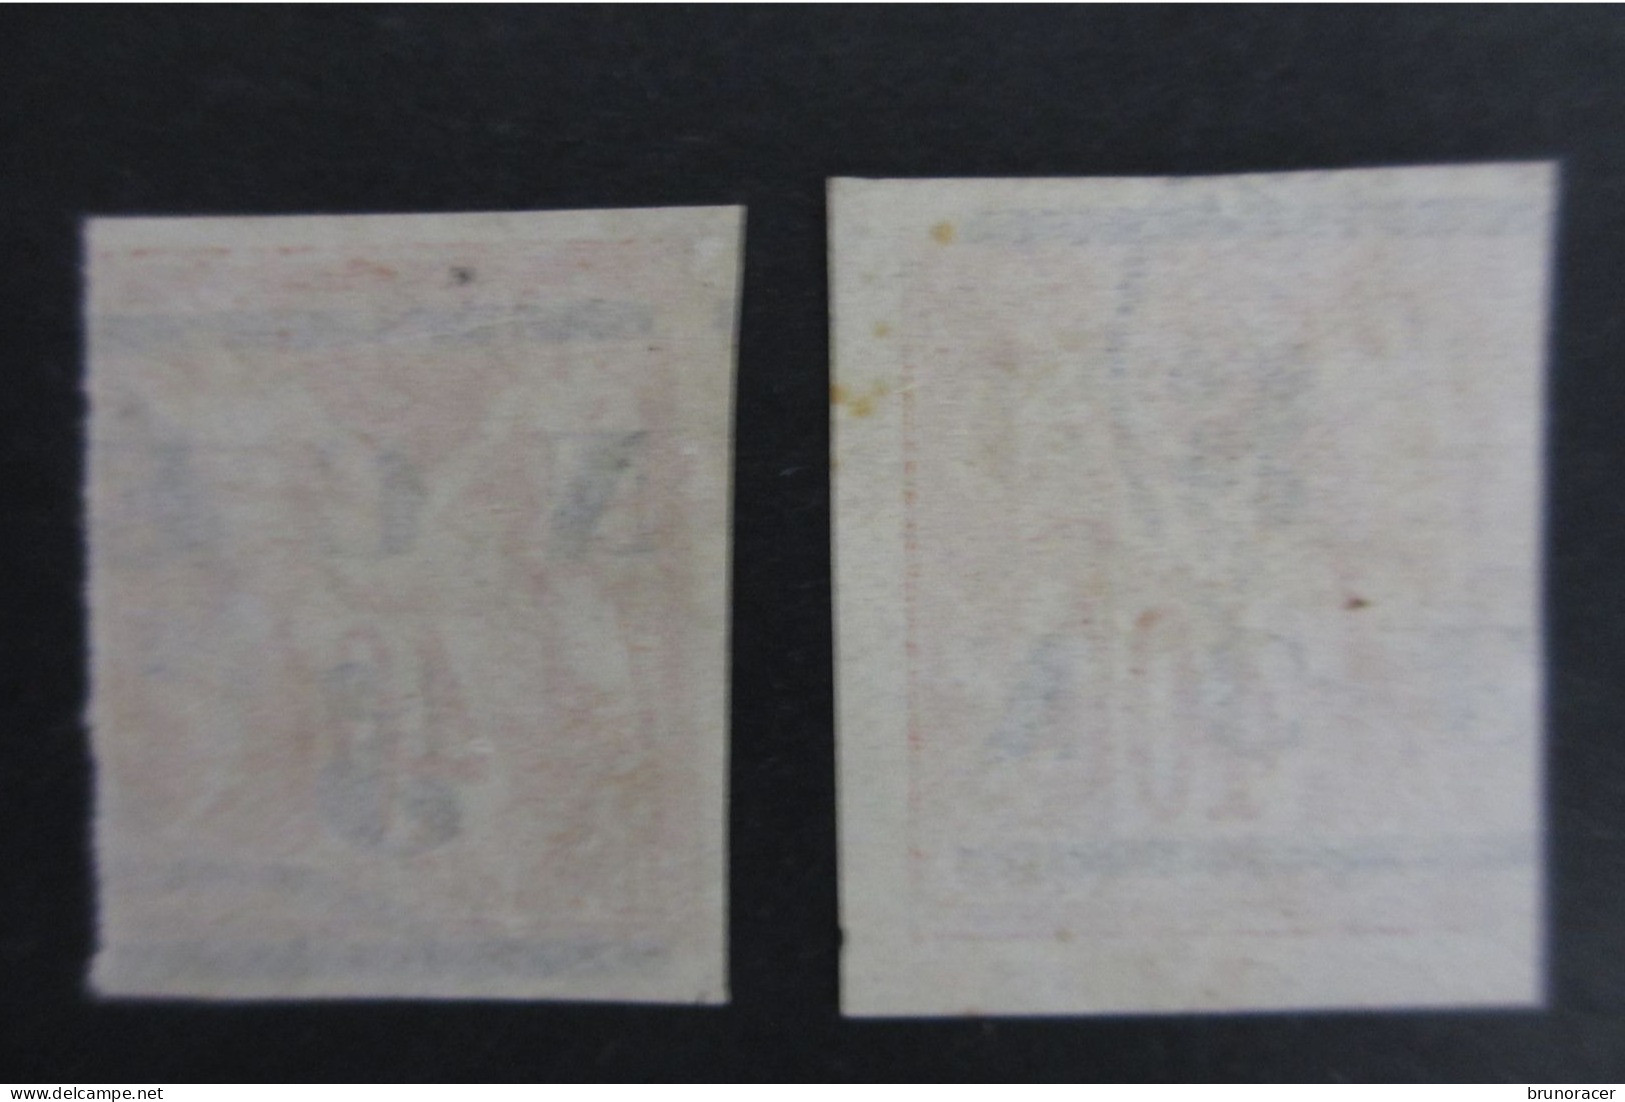 Nelle CALEDONIE N°6/6a. Oblit. TTB  COTE 80 EUROS    VOIR SCANS - Unused Stamps